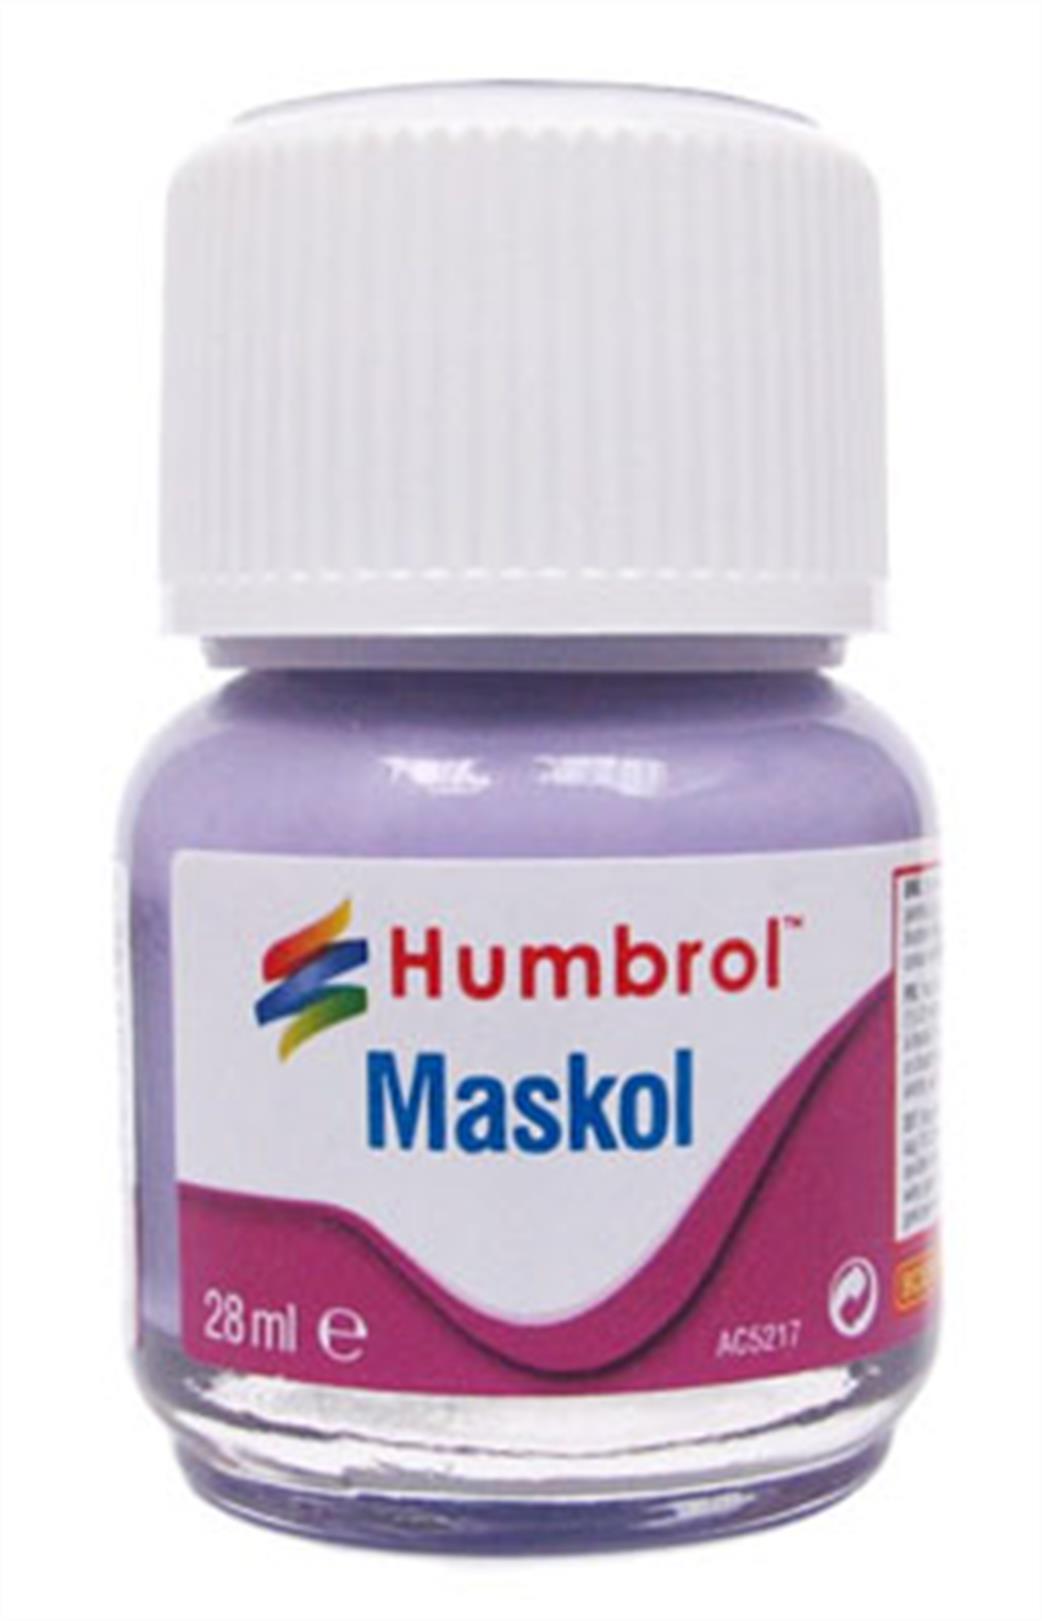 Humbrol AC5217 Maskol Masking Fluid 28ml Bottle